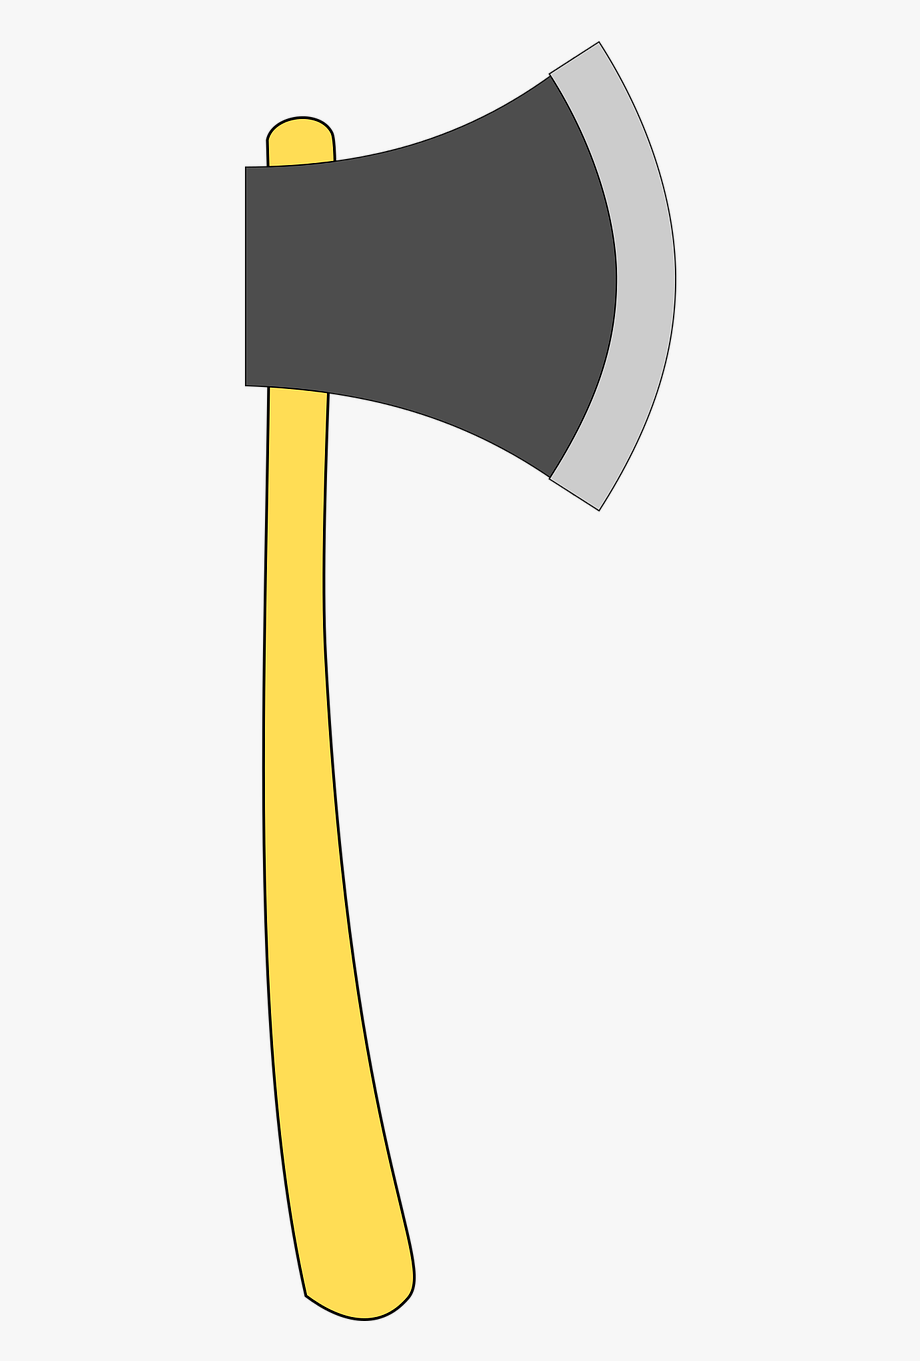 Clip art of cliparts. Ax clipart lumberjack axe